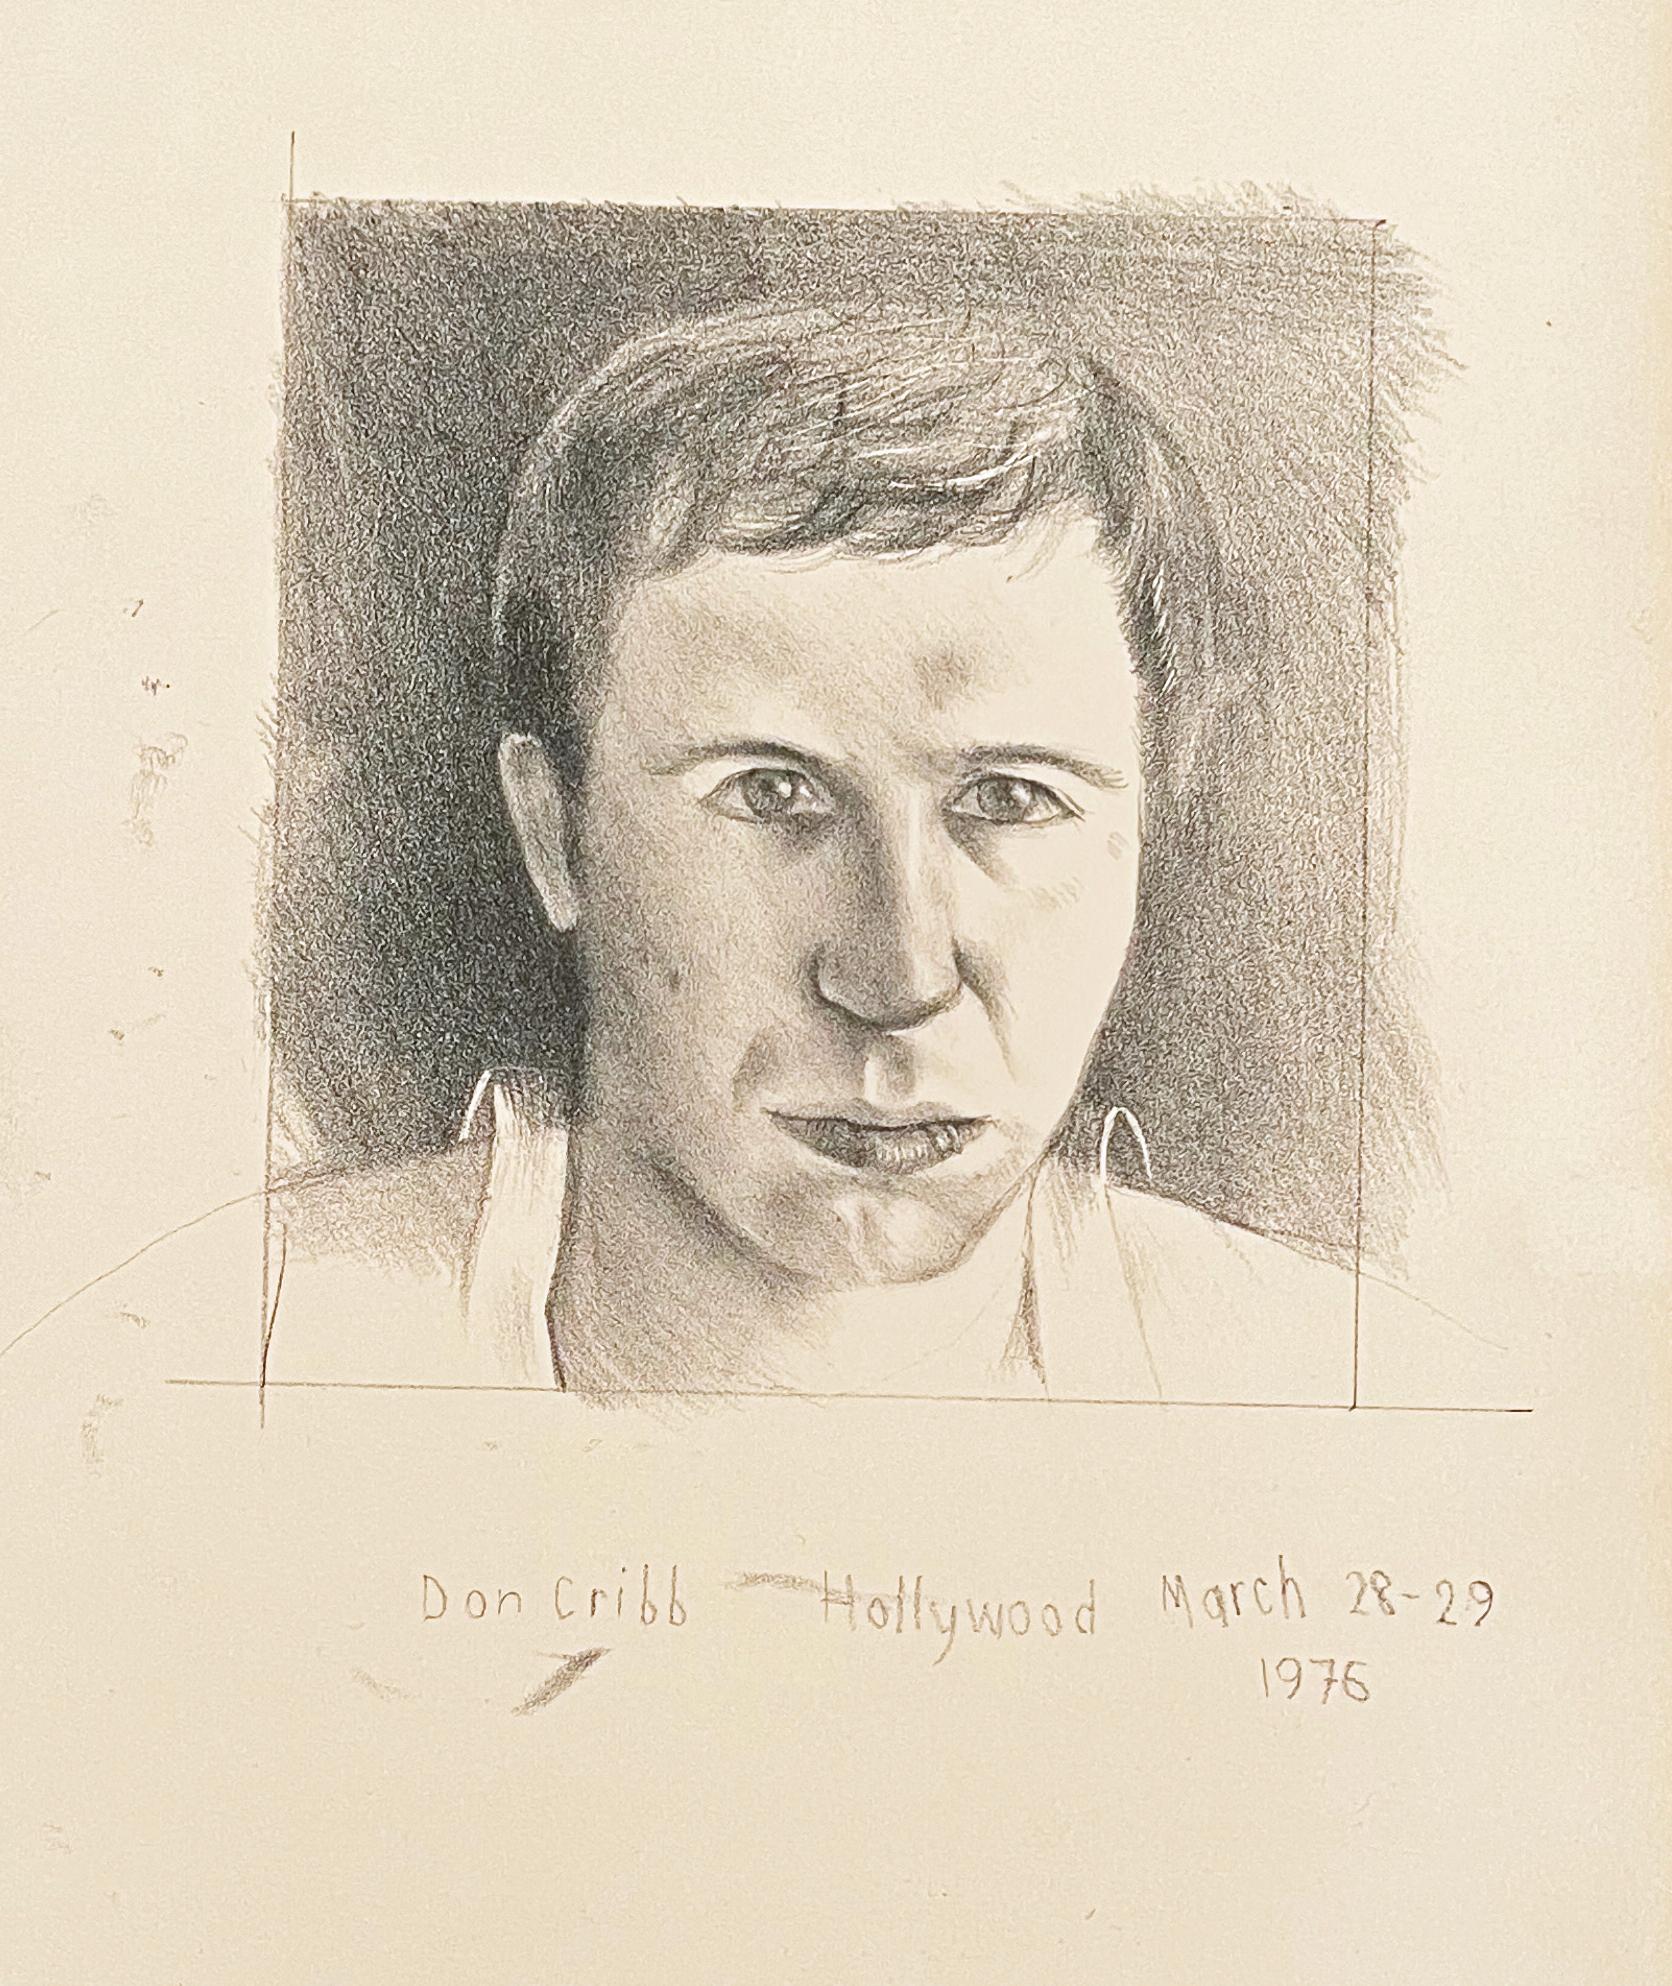 David Hockney Portrait Print – DONALD CRIBB